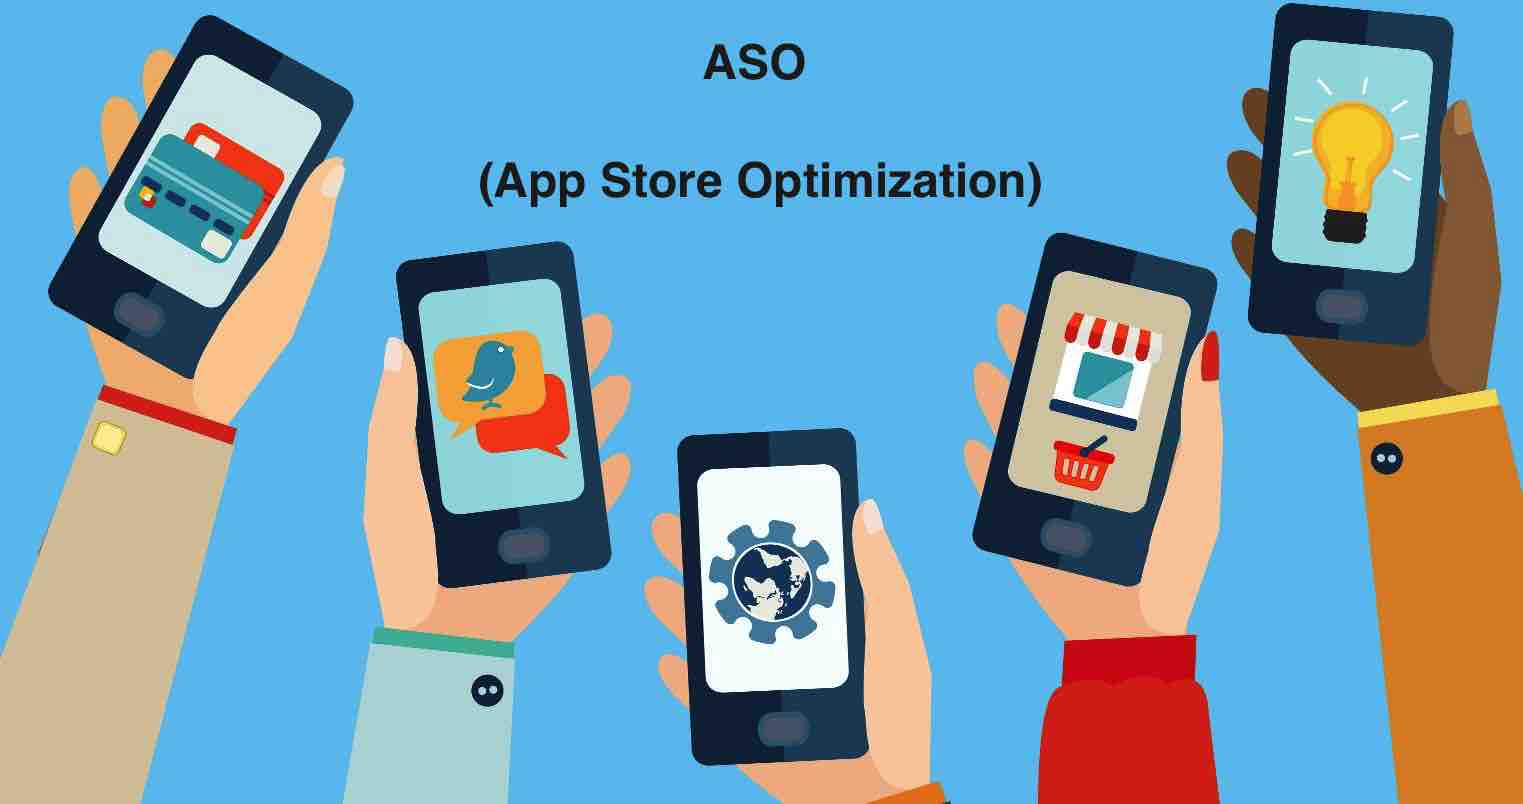 aso app store optimization services